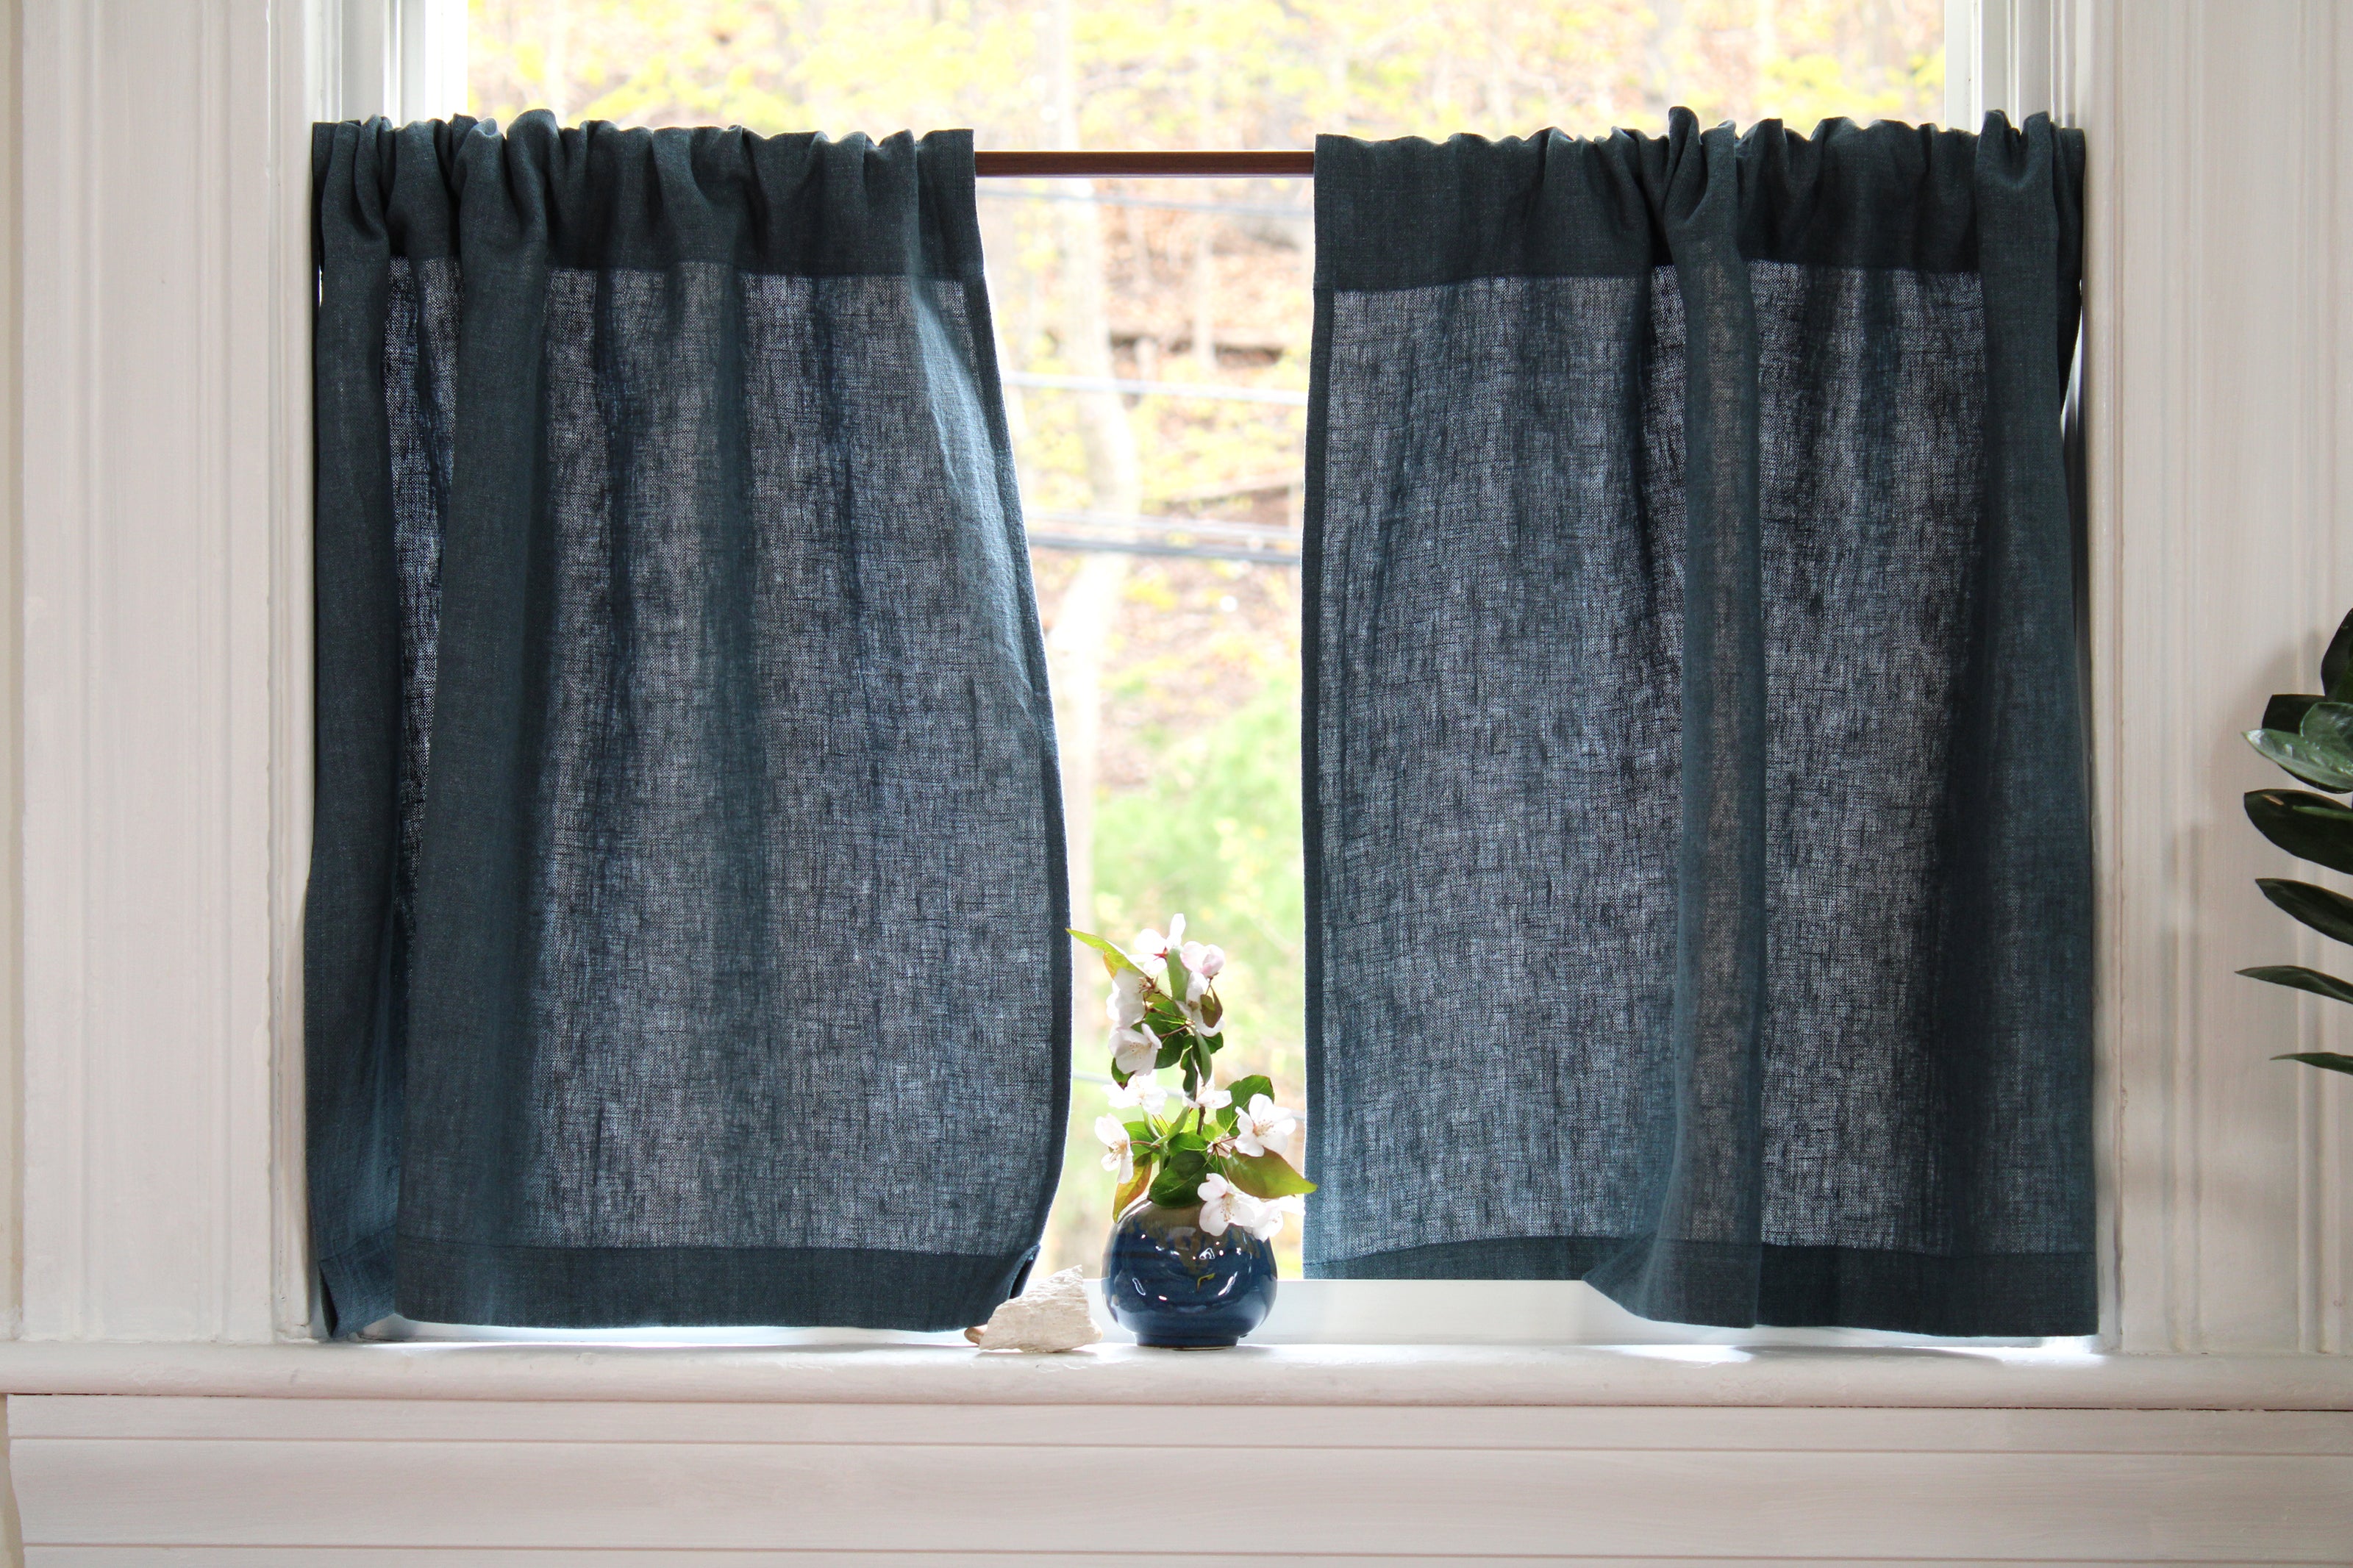 100% Linen Cafe Curtains / Kitchen Linen Curtains / Custom Curtains US